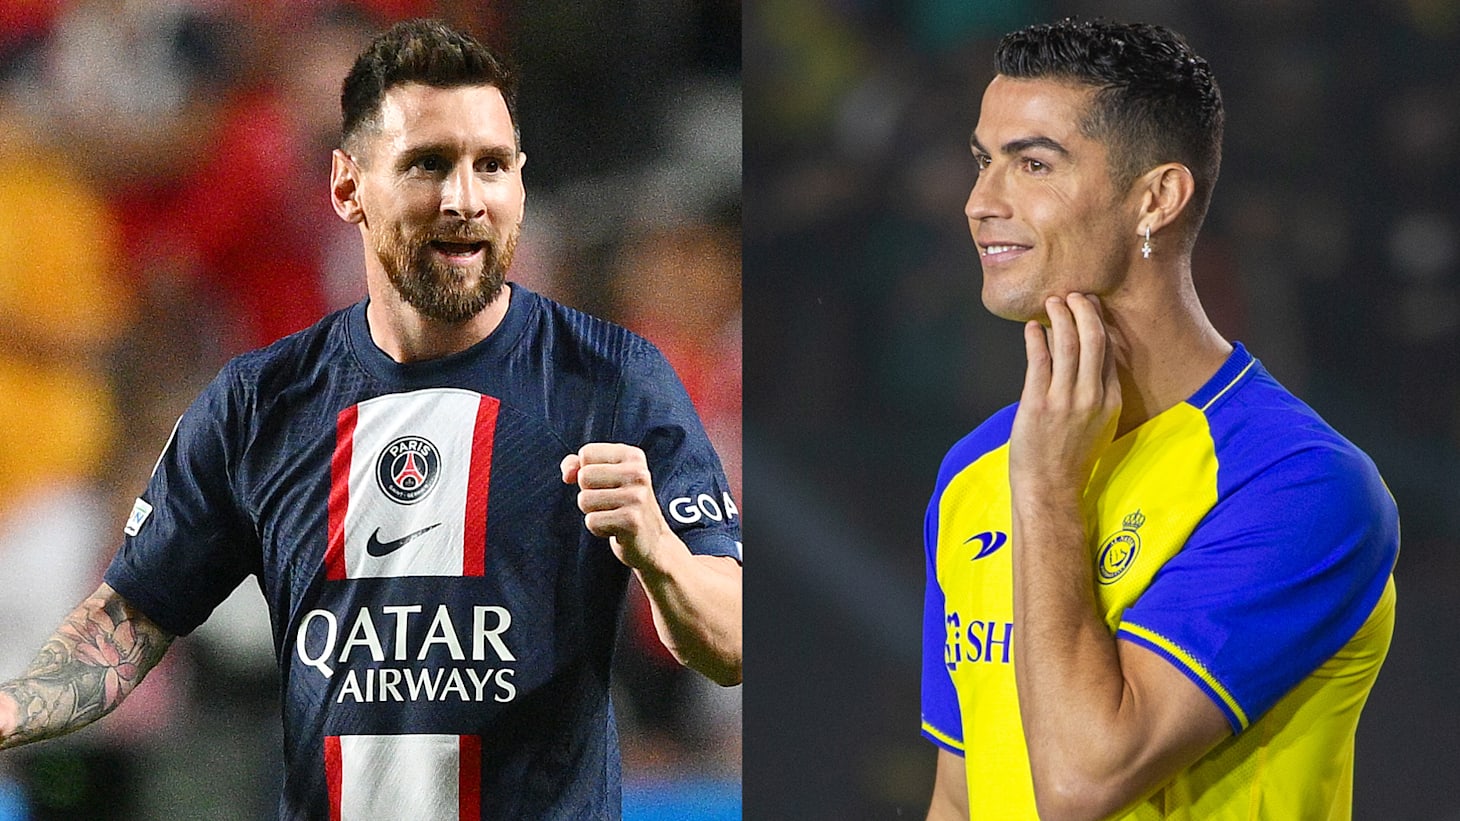 Cristiano Ronaldo v Lionel Messi: Awards, goals and stats compared, Football News